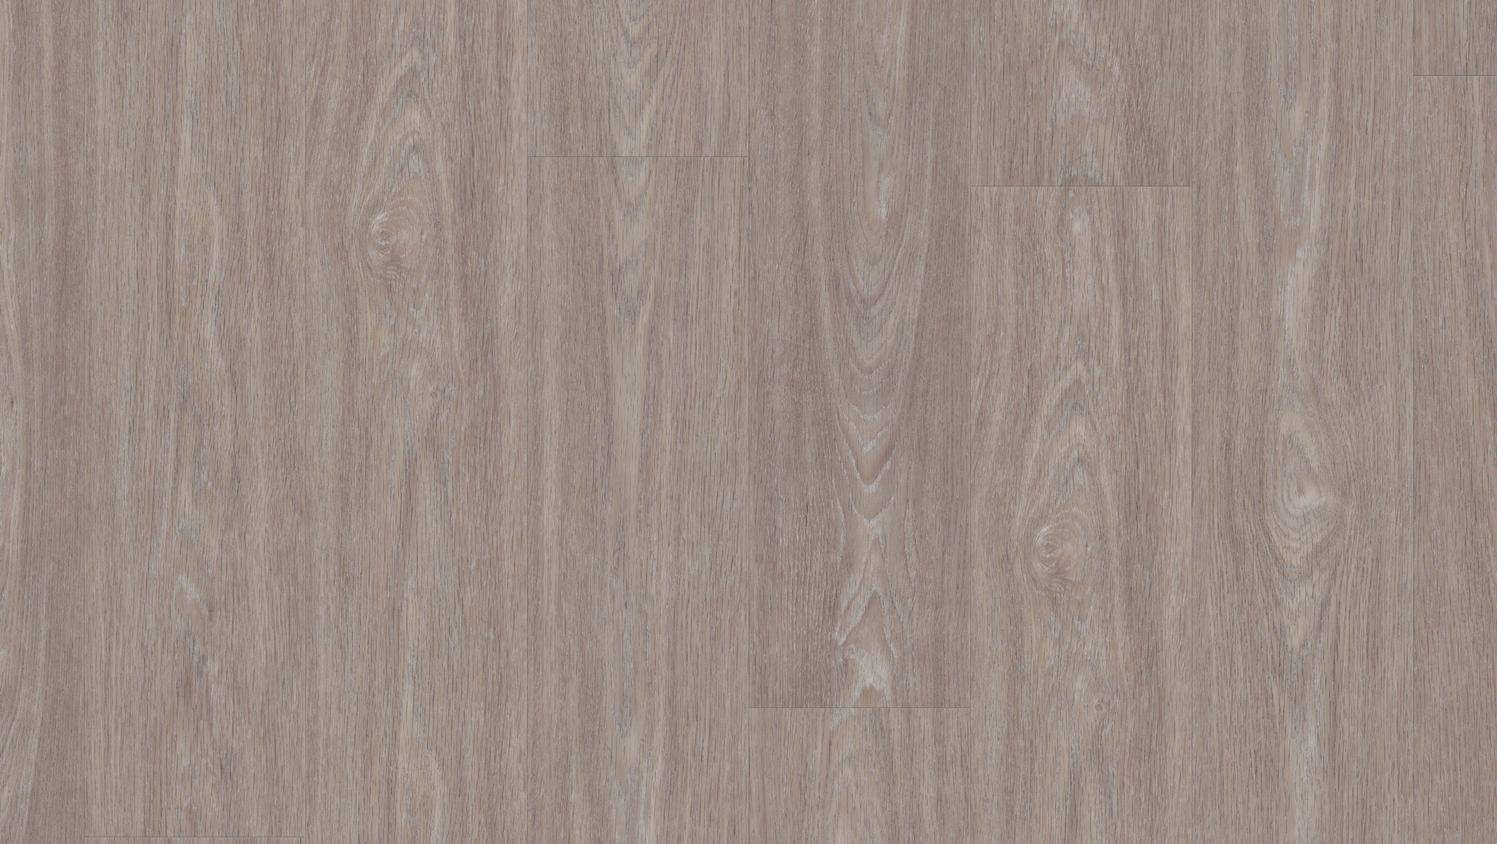 Tarkett Starfloor Click Ultimate 55 Bleached Oak BROWN